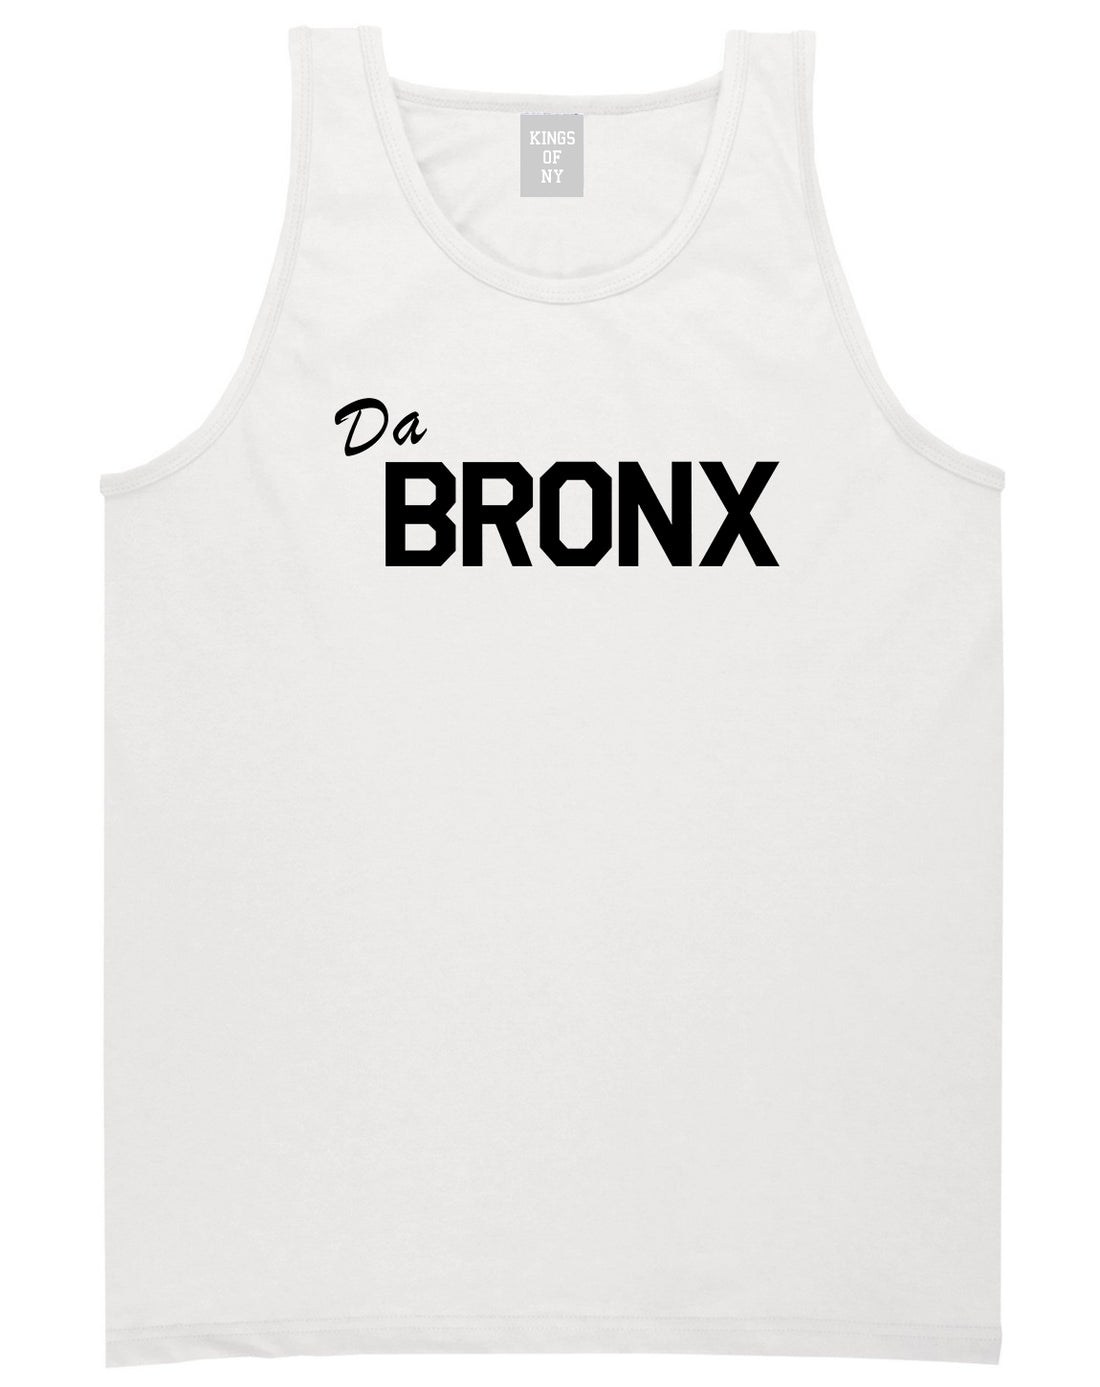 Da Bronx Mens Tank Top Shirt White by Kings Of NY